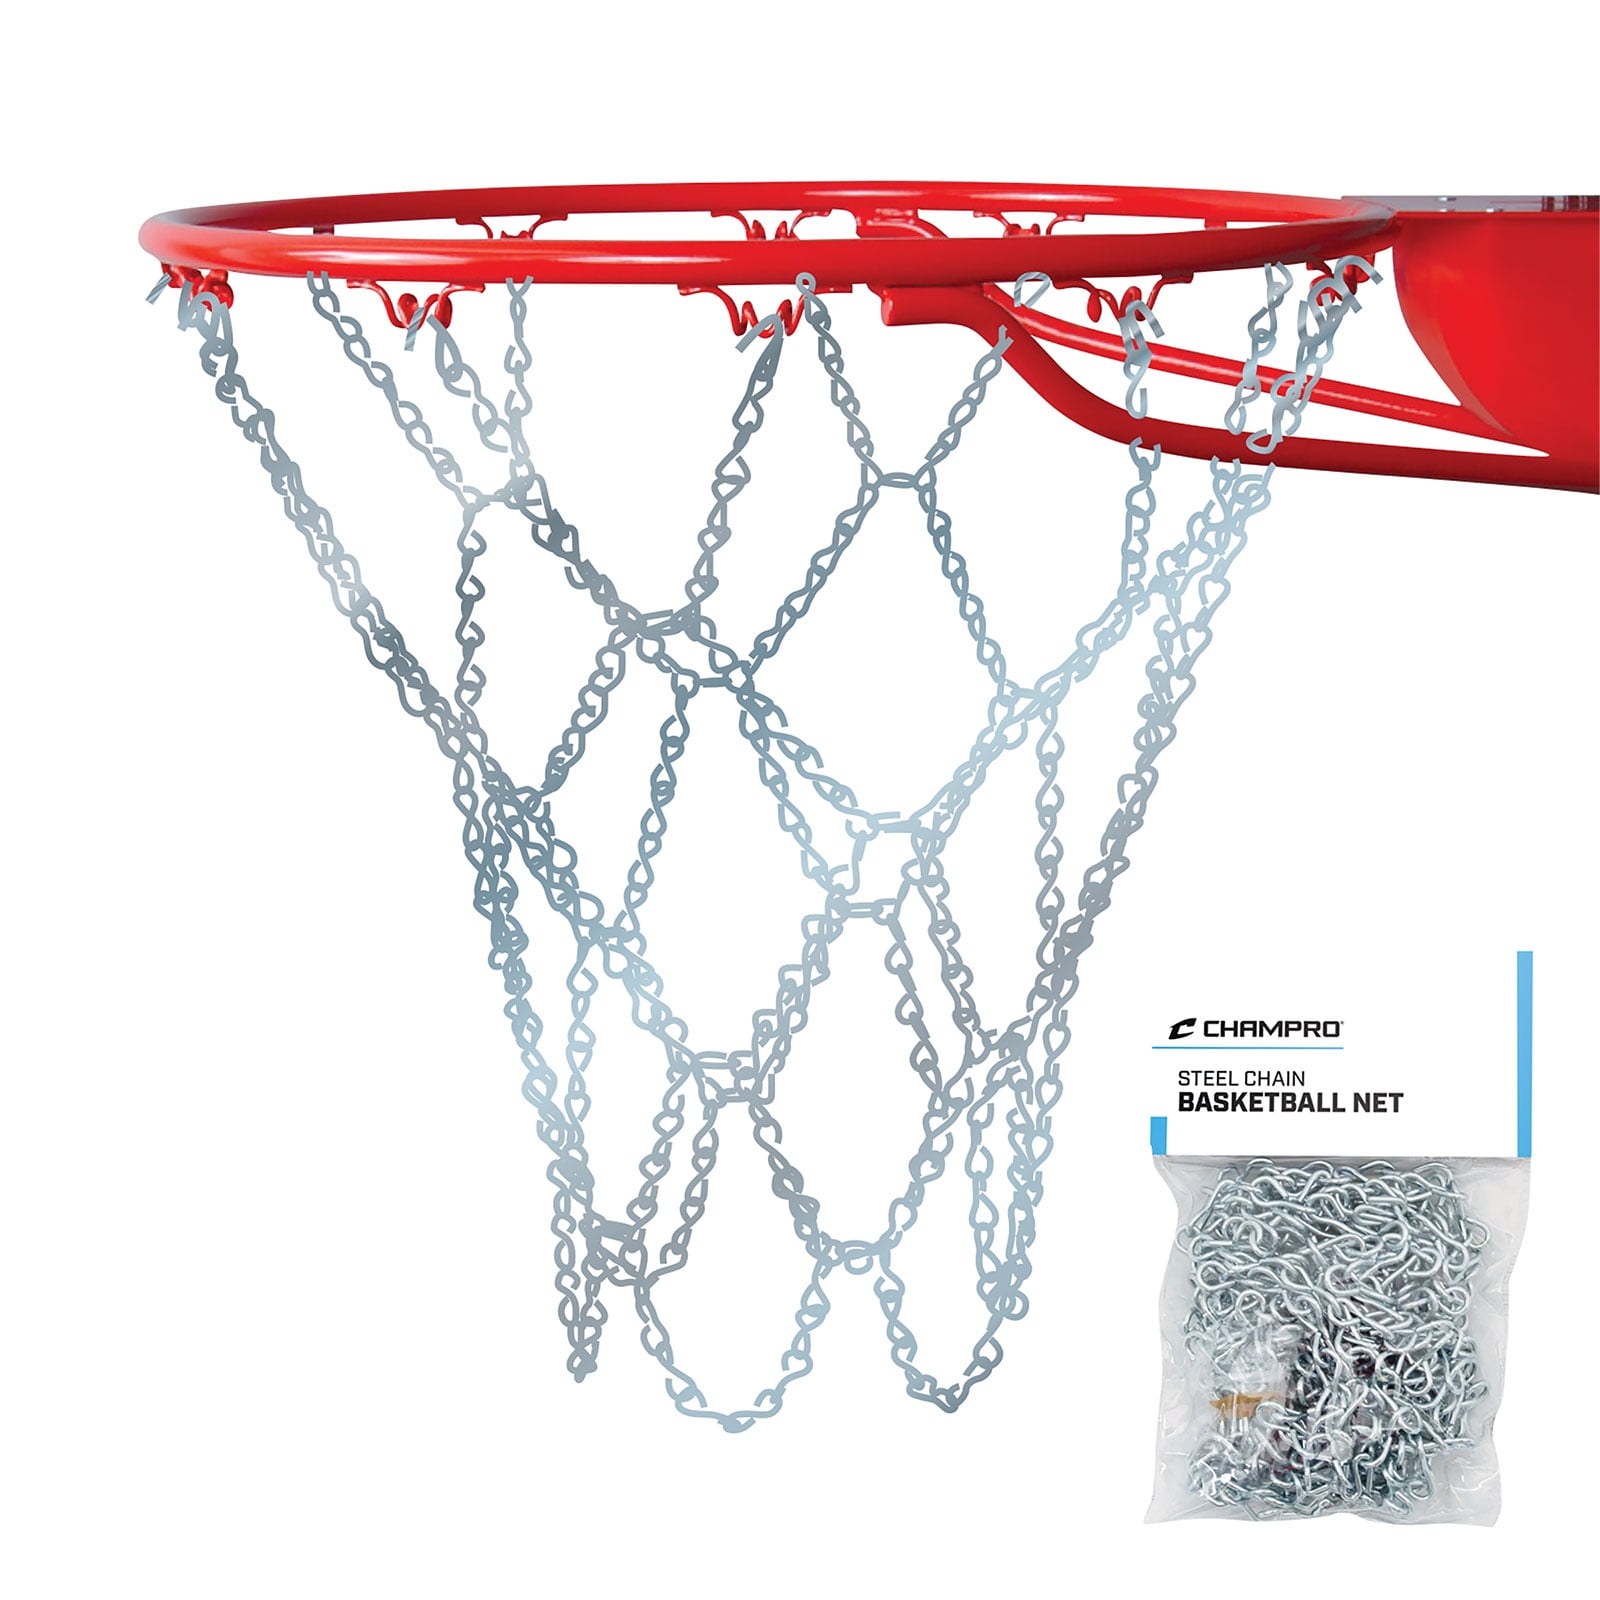 Chain Basketball Net Heavy Duty Galvanized Steel Goal Strong Hoops Outside New 